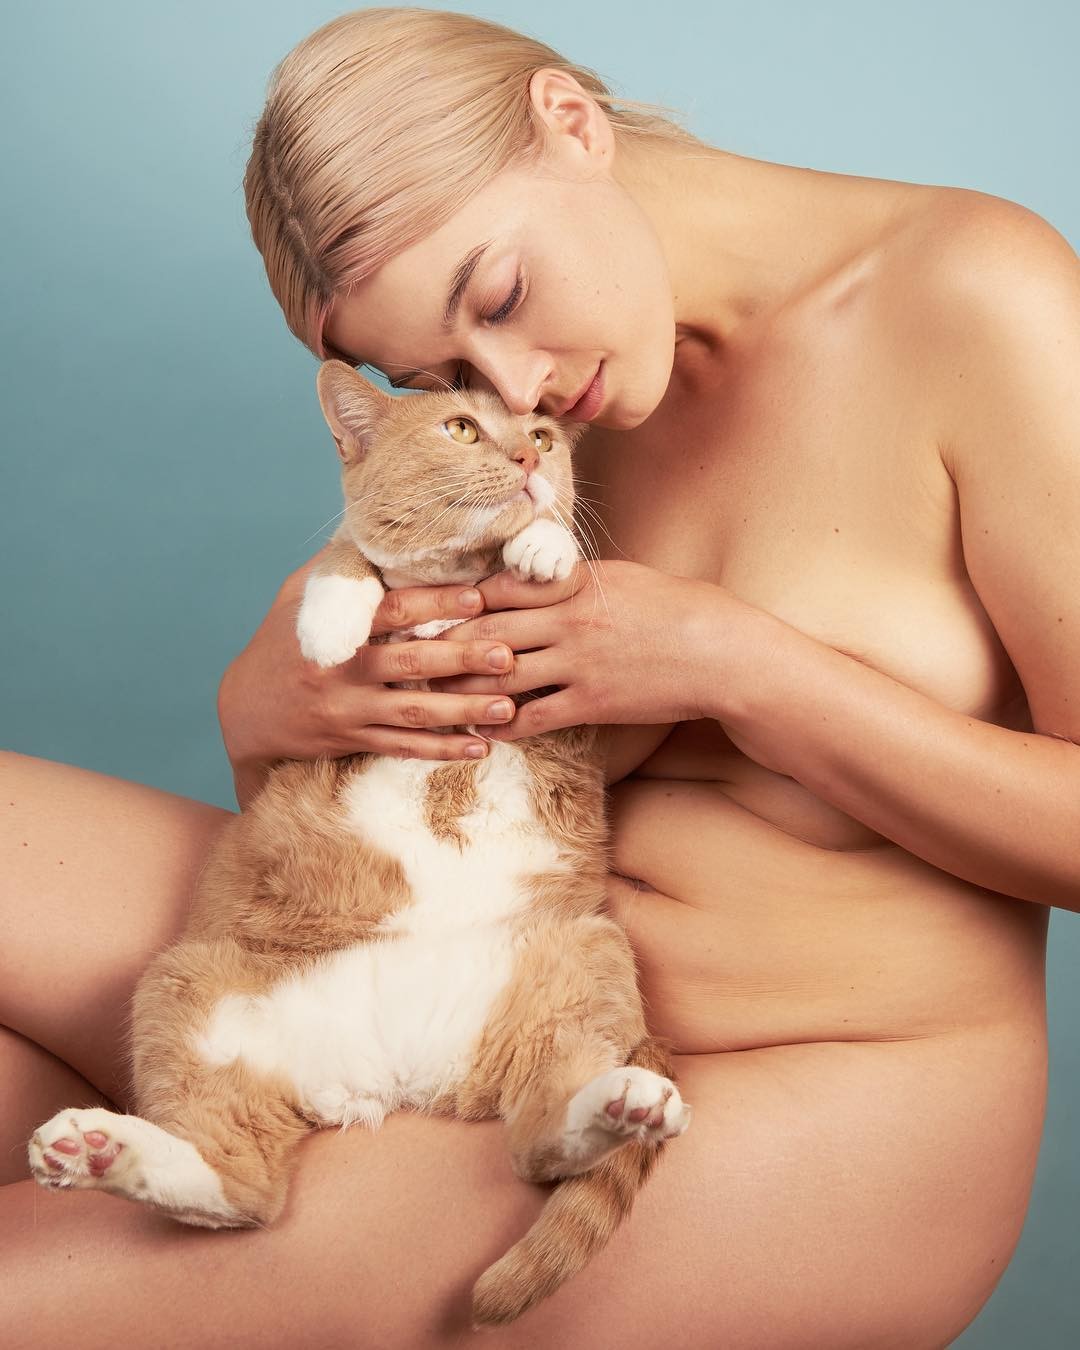 Khrystyana Kazakova Nude TheFappeningPro 2 - Khrystyana Kazakova Nude And Sexy (159 Photos And Videos)